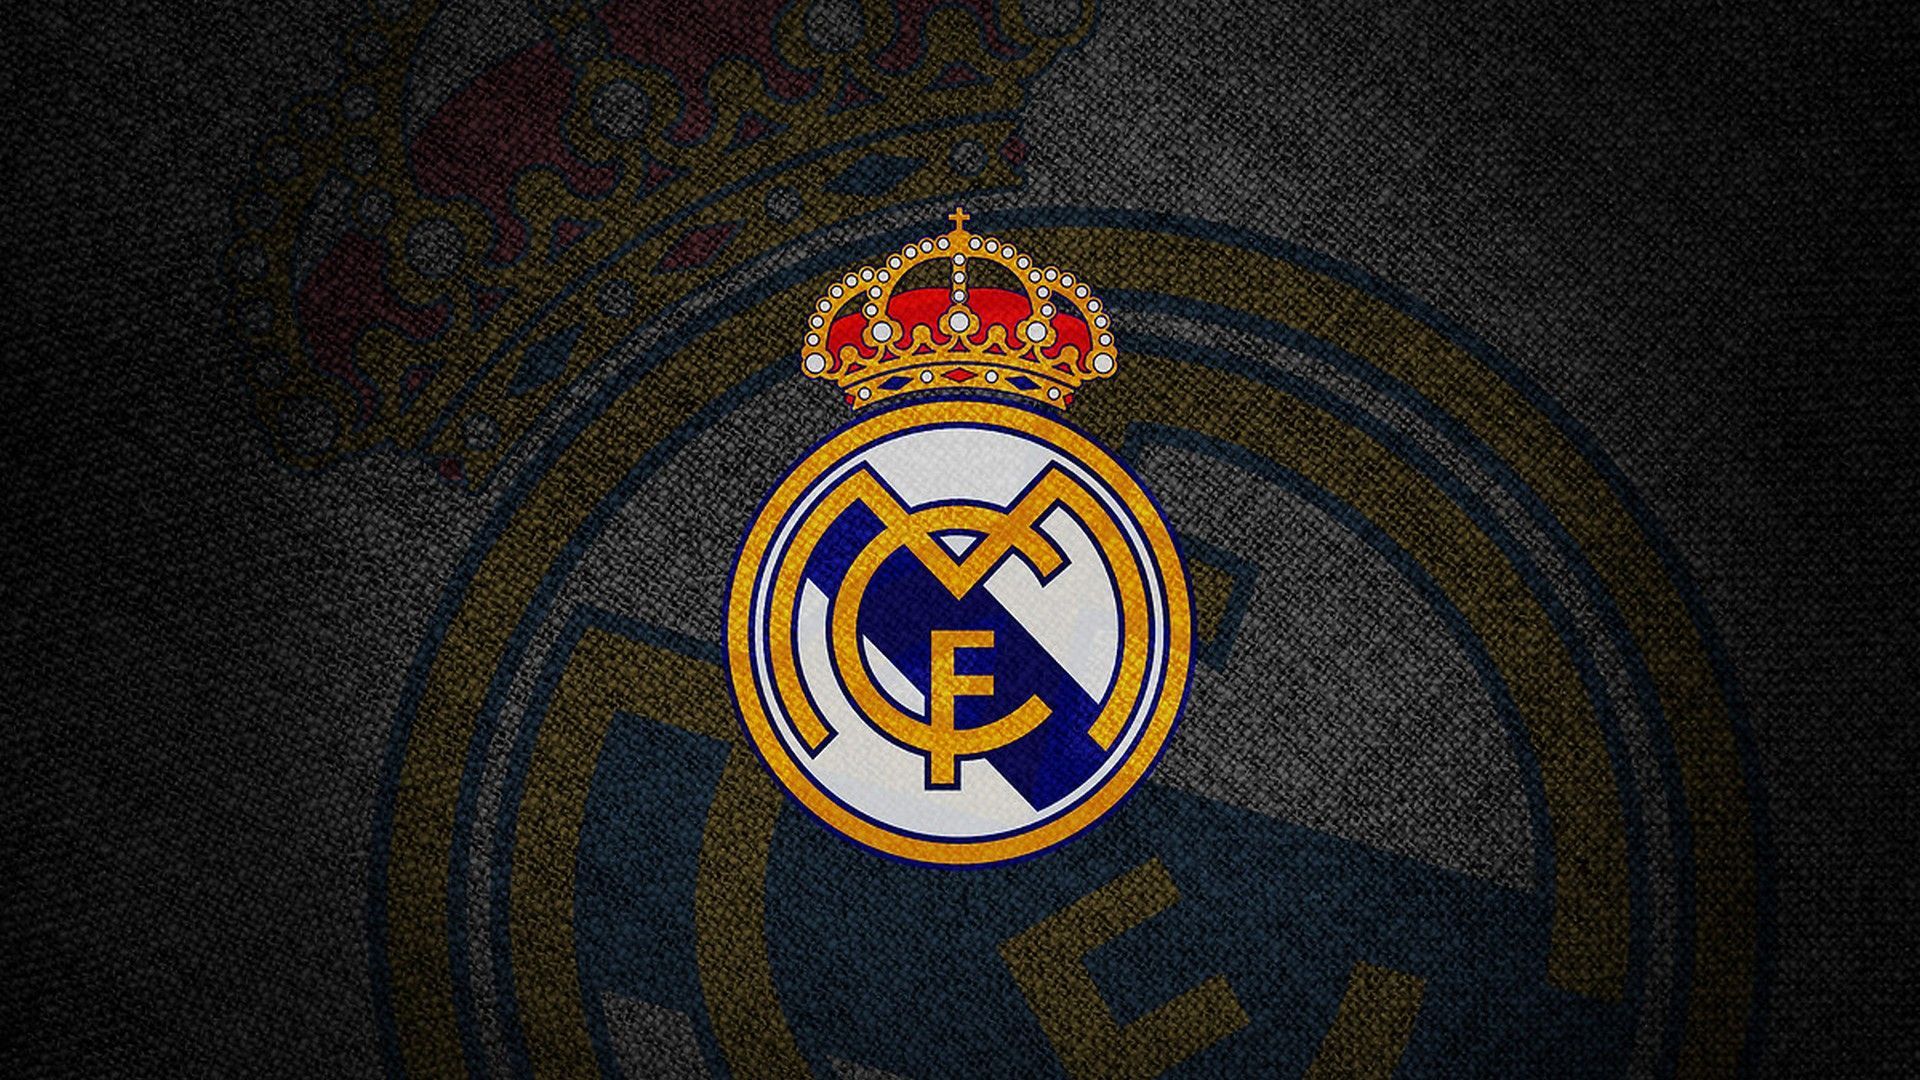 Background Real Madrid CF HD. Best Wallpaper HD. Real madrid wallpaper, Madrid wallpaper, Real madrid logo wallpaper